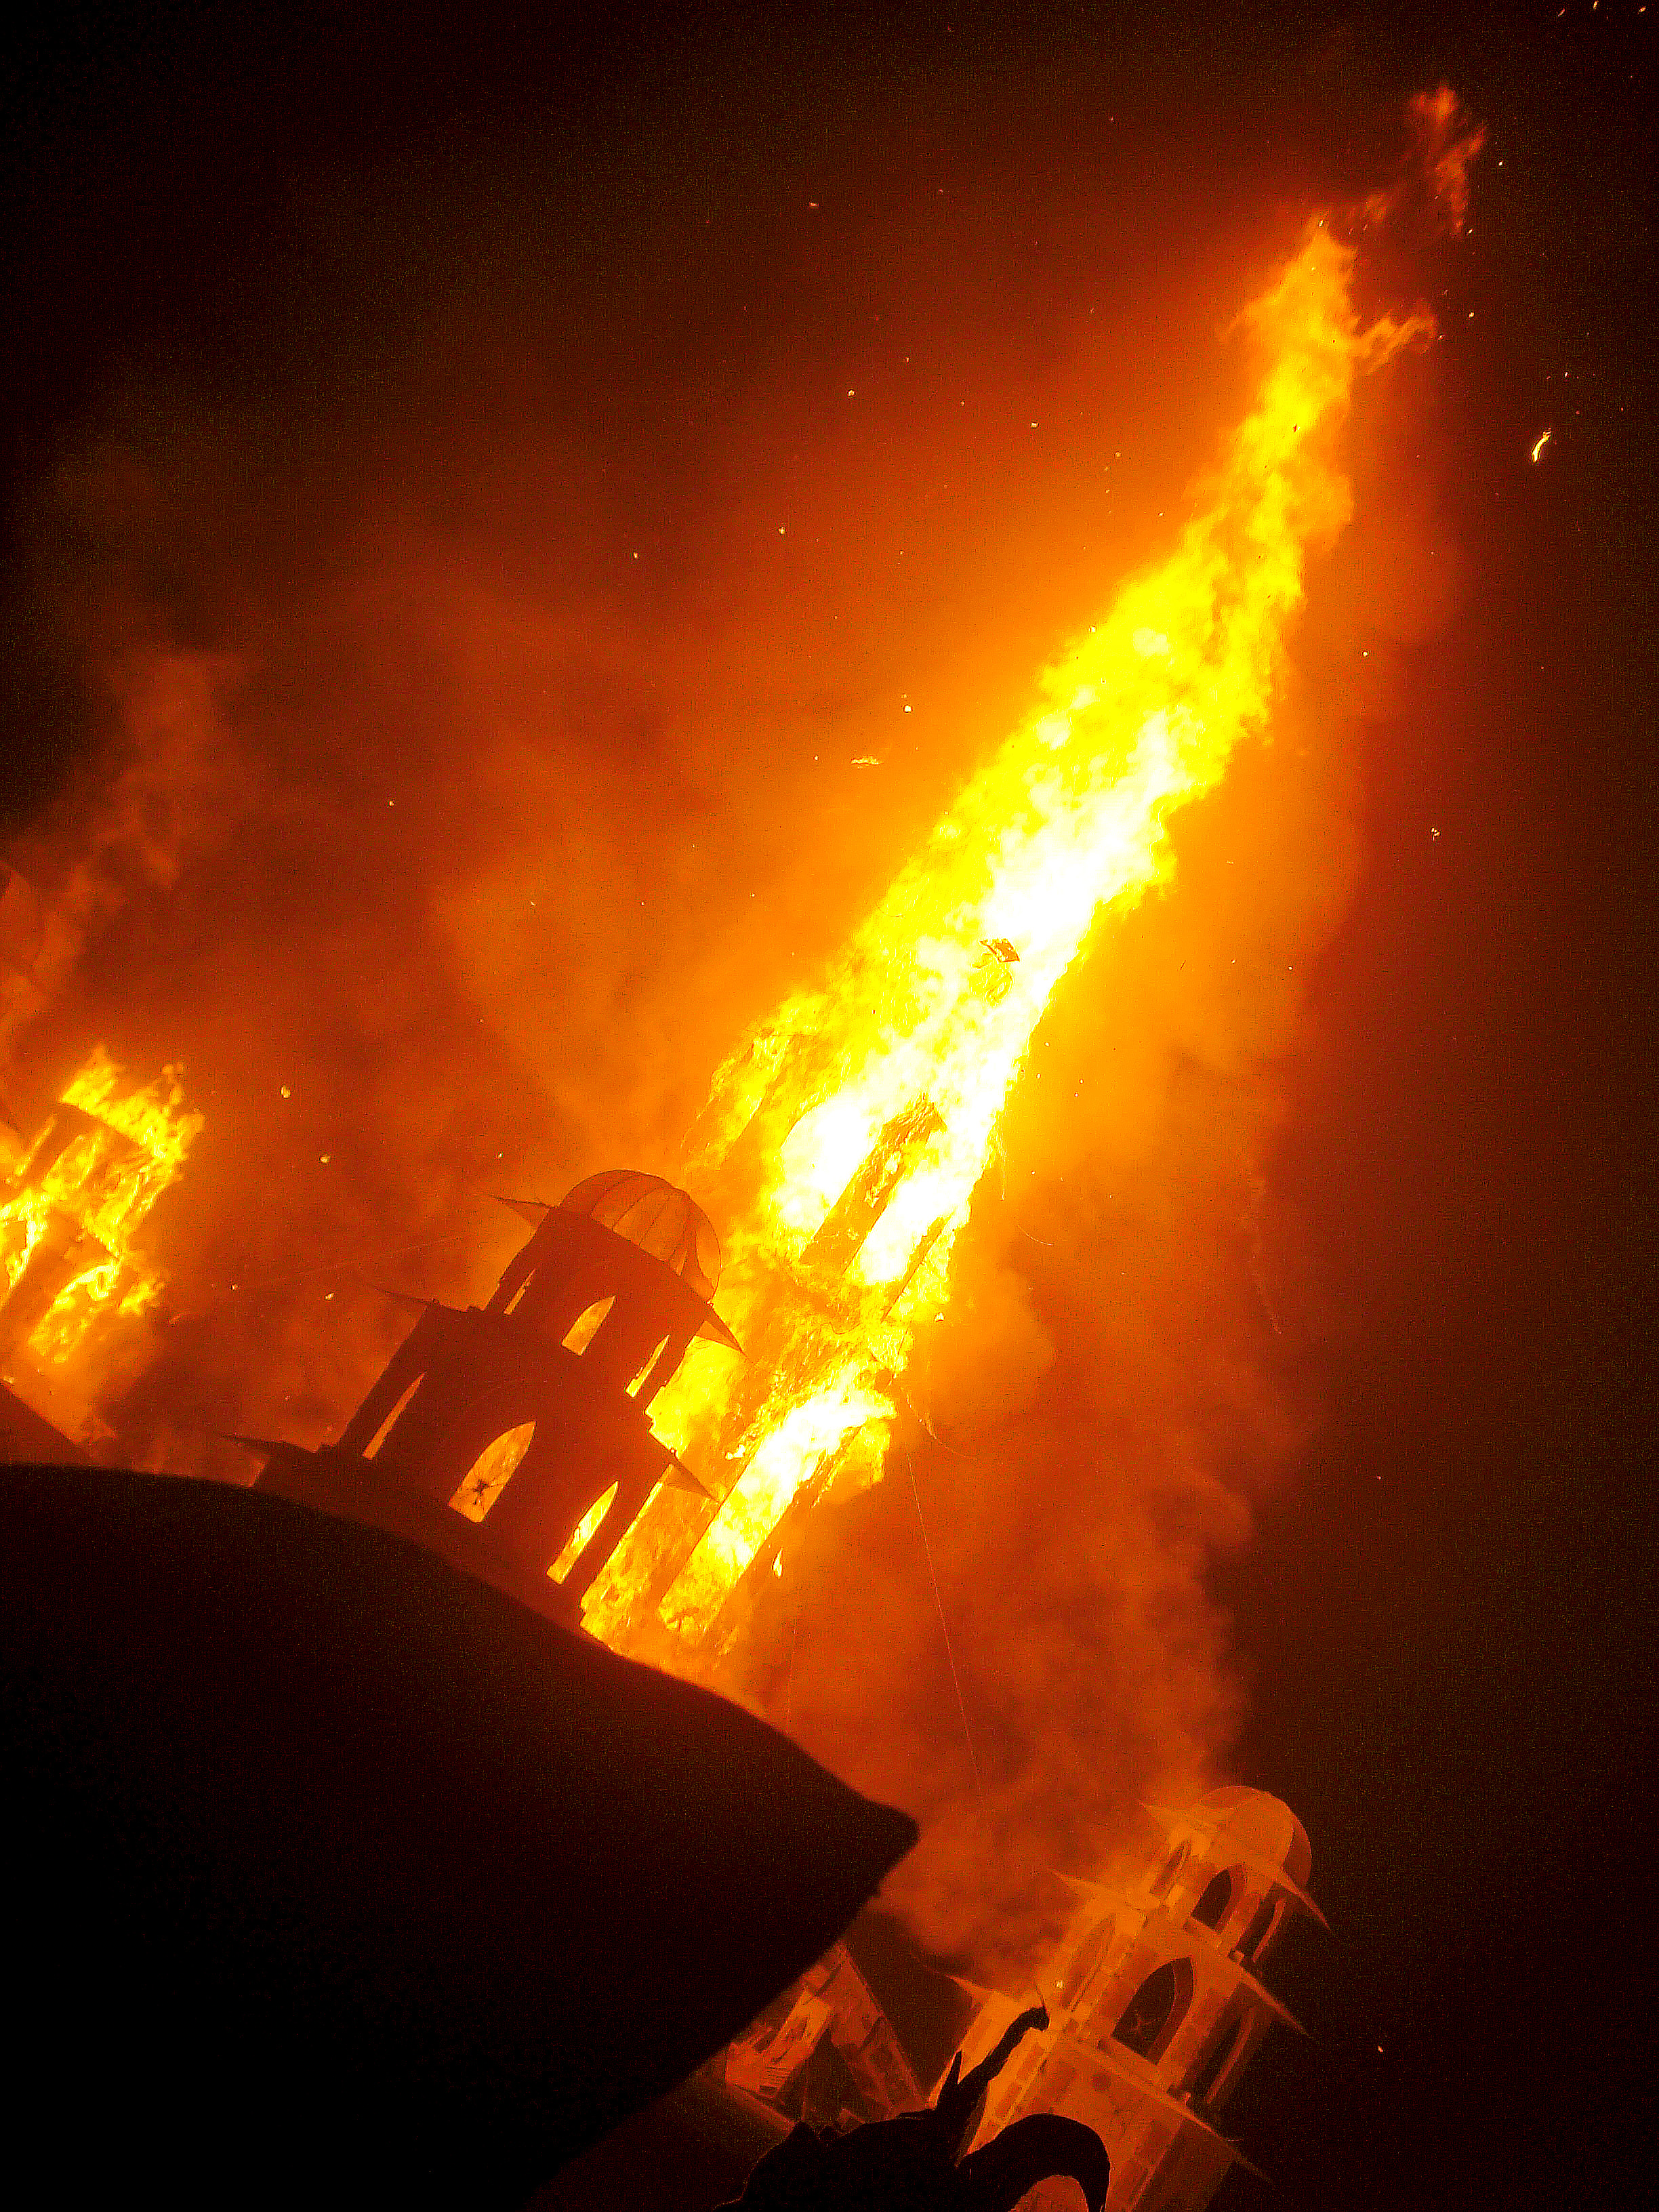 Burning Man 2011 - Cliff Schinkel Photograph